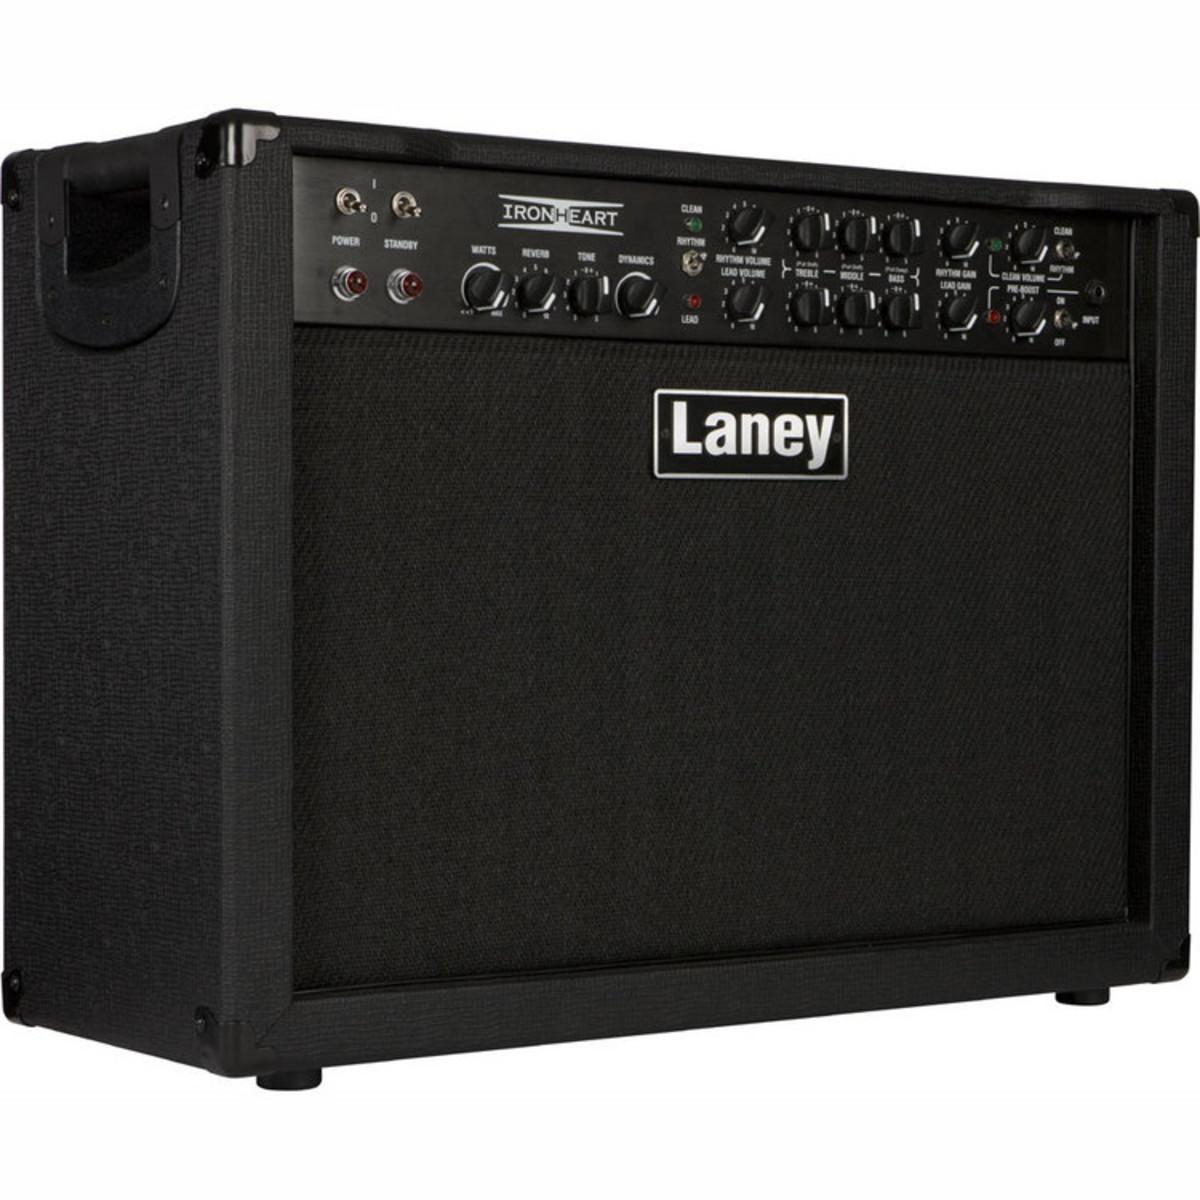 Laney - Combo Iron Heart para Guitarra Eléctrica, 60W 2x12 Mod.IRT60-212_68